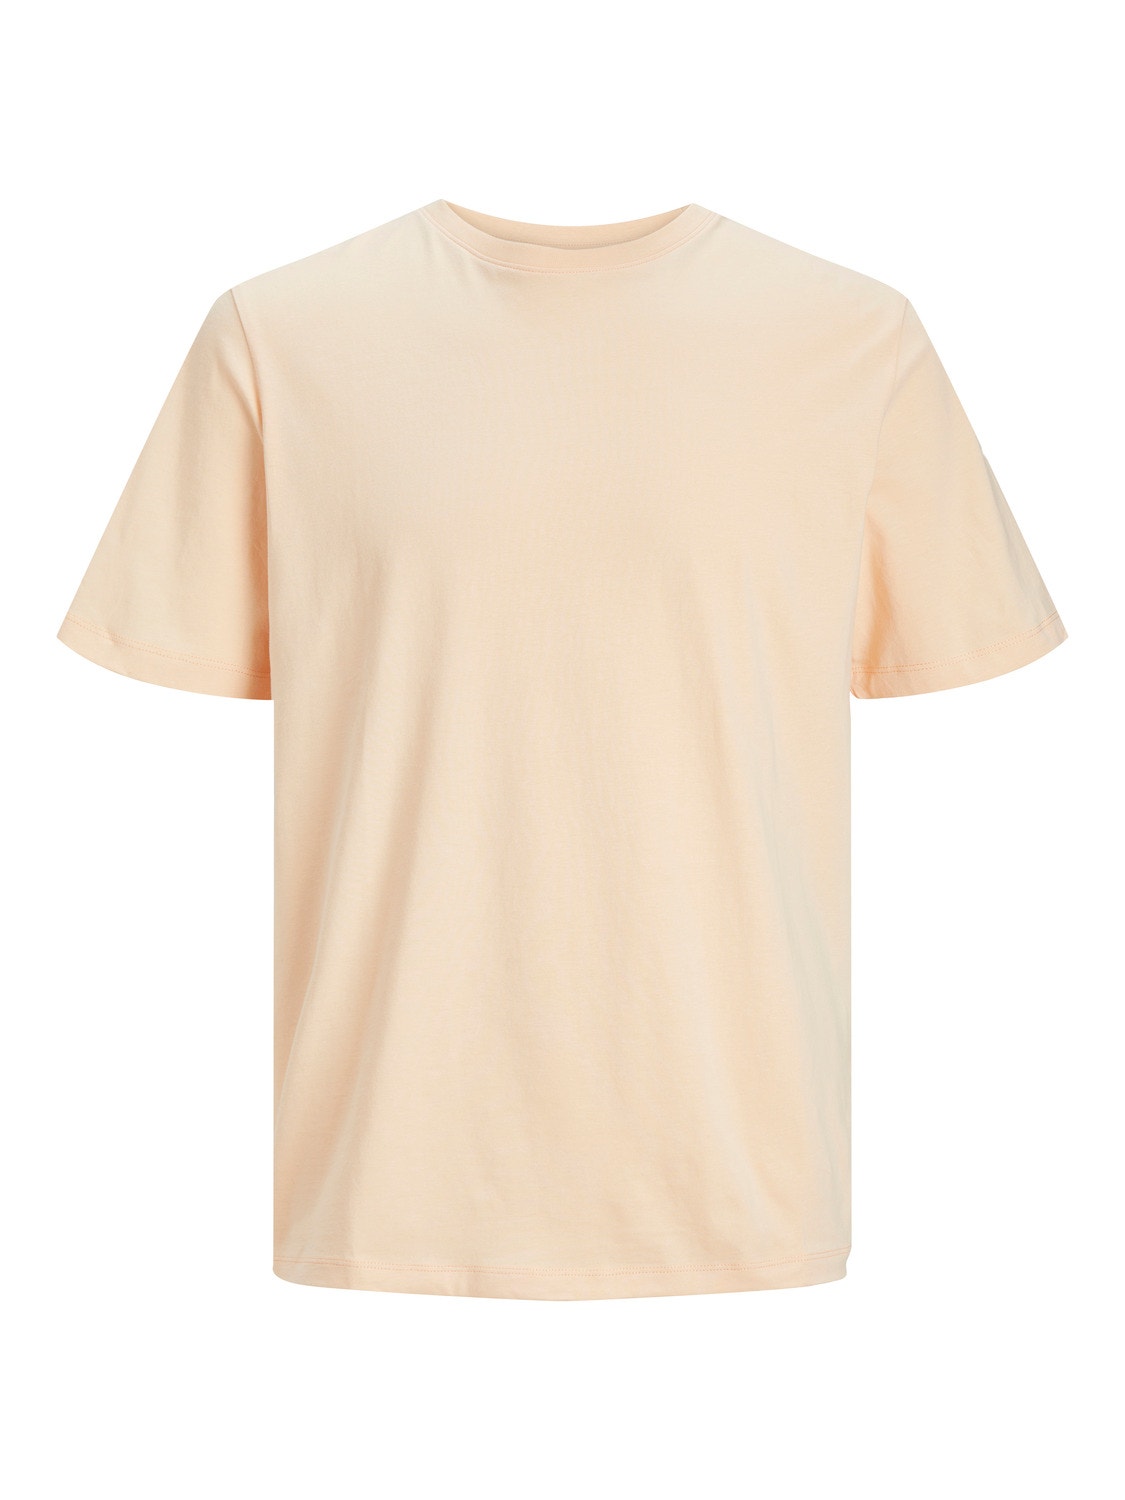 Jack & Jones Plain Crew neck T-shirt -Apricot Ice  - 12156101